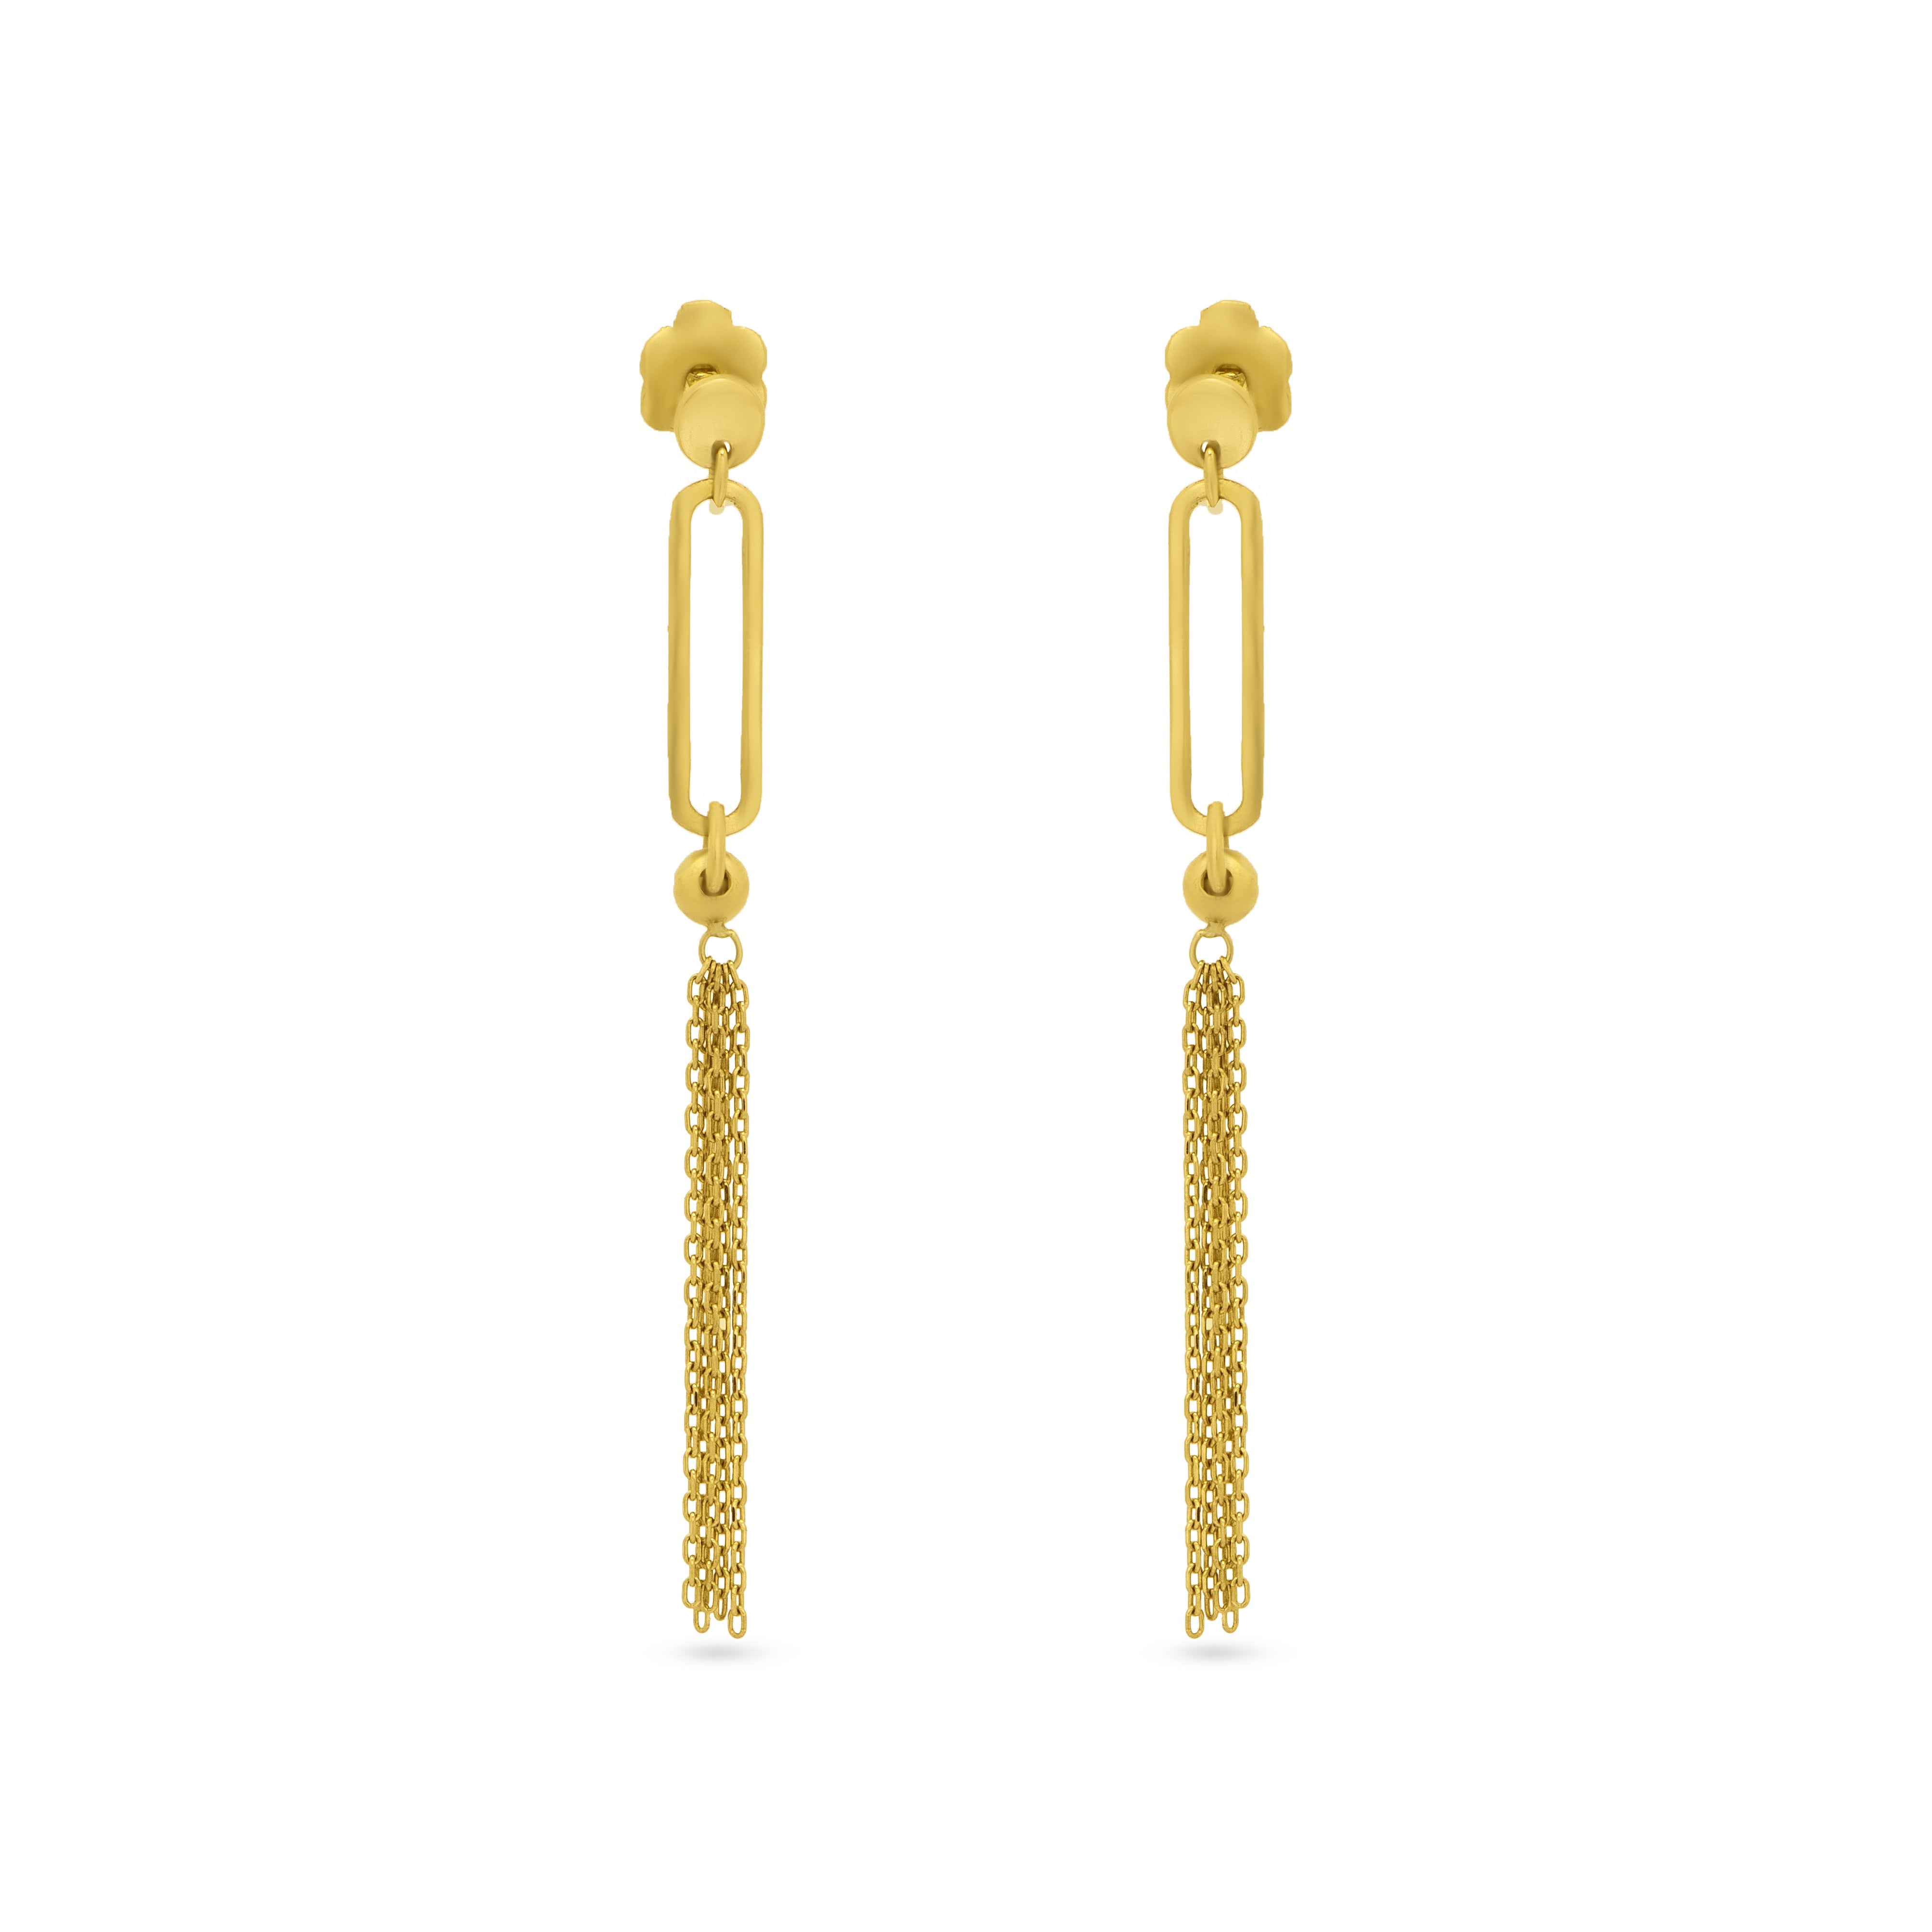 Unique Dangling Golden Clip Earring in Yellow 18 K Gold - S-EN083G/Y/WG